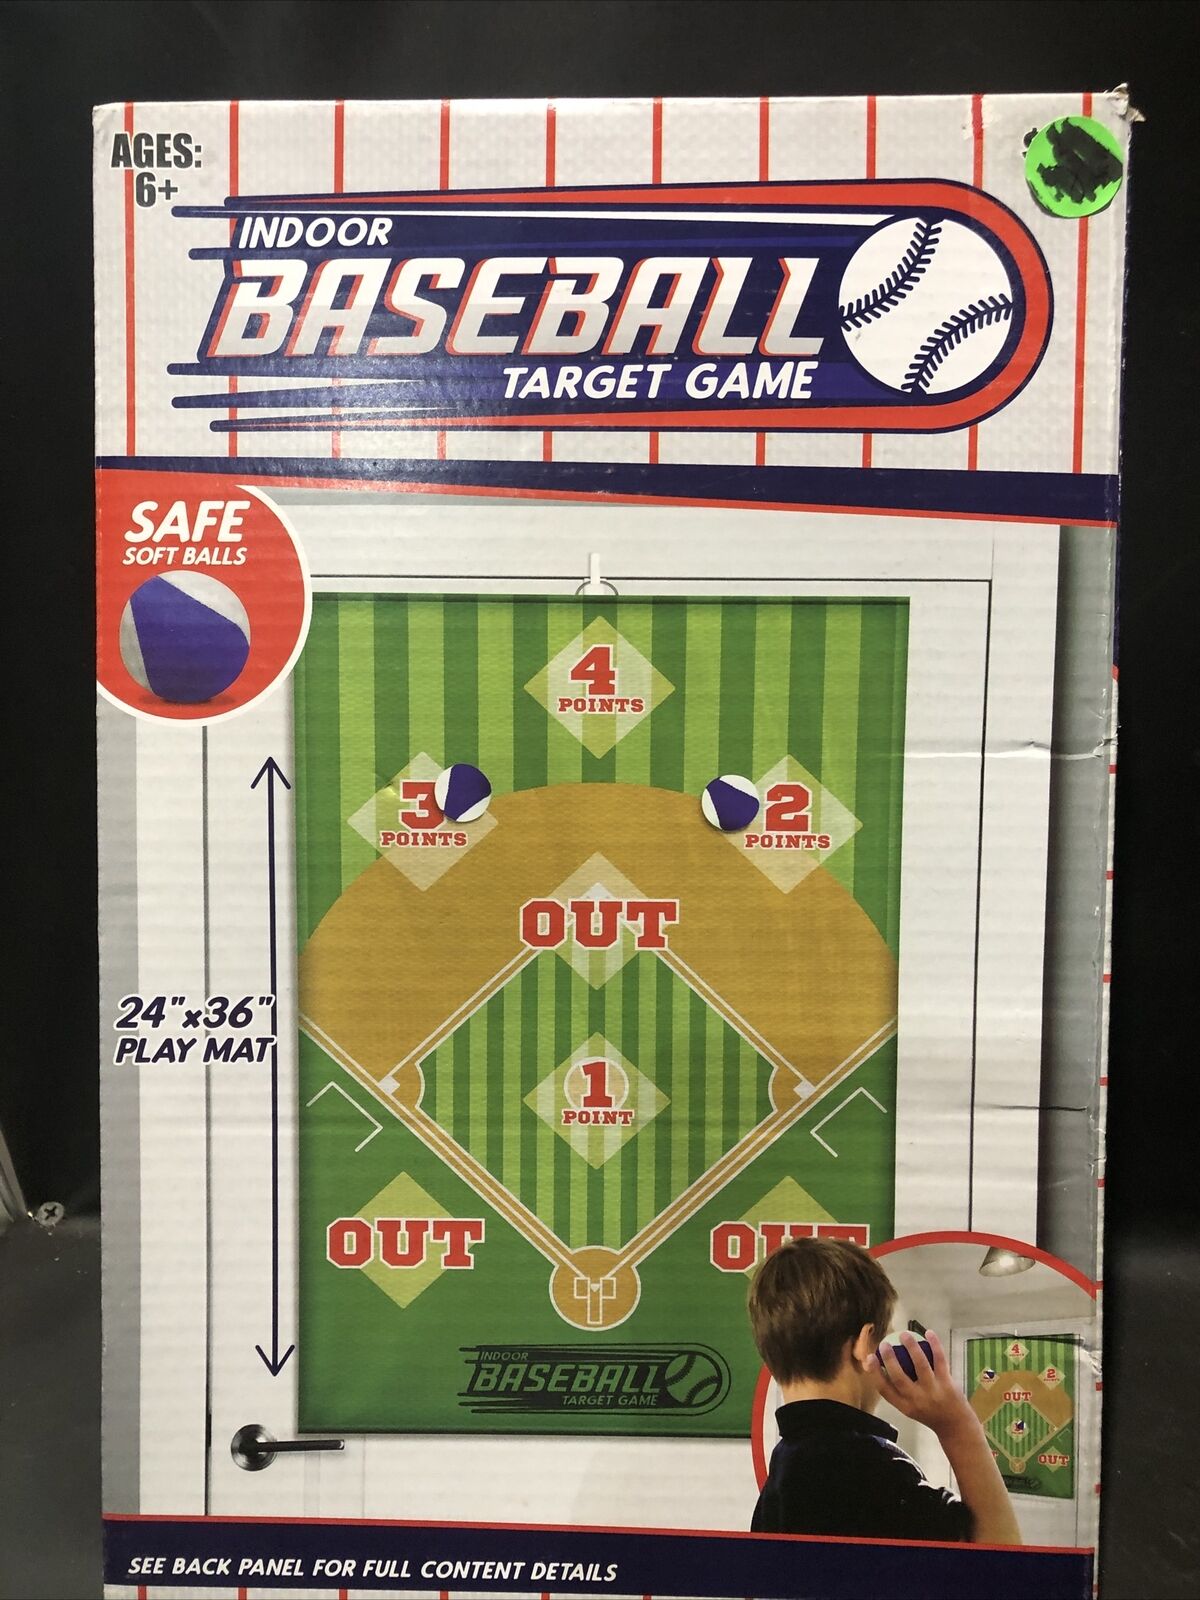 Indoor baseball target game 24” x 36” playmat and three safe sof